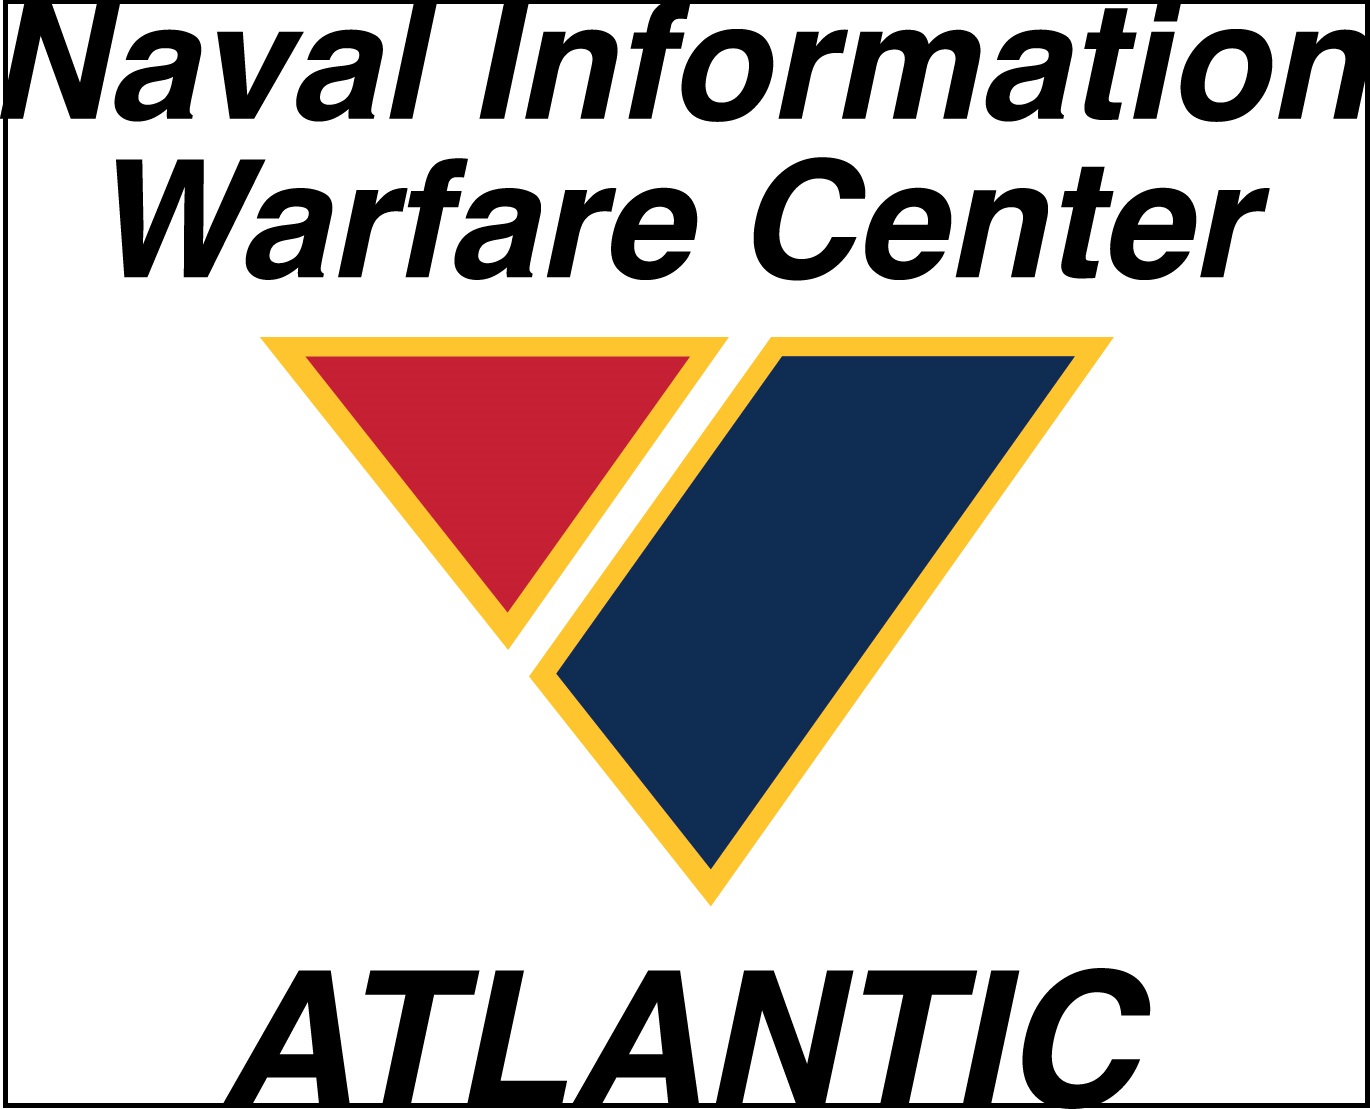 A logo for the Naval Information Warfare Center Atlantic